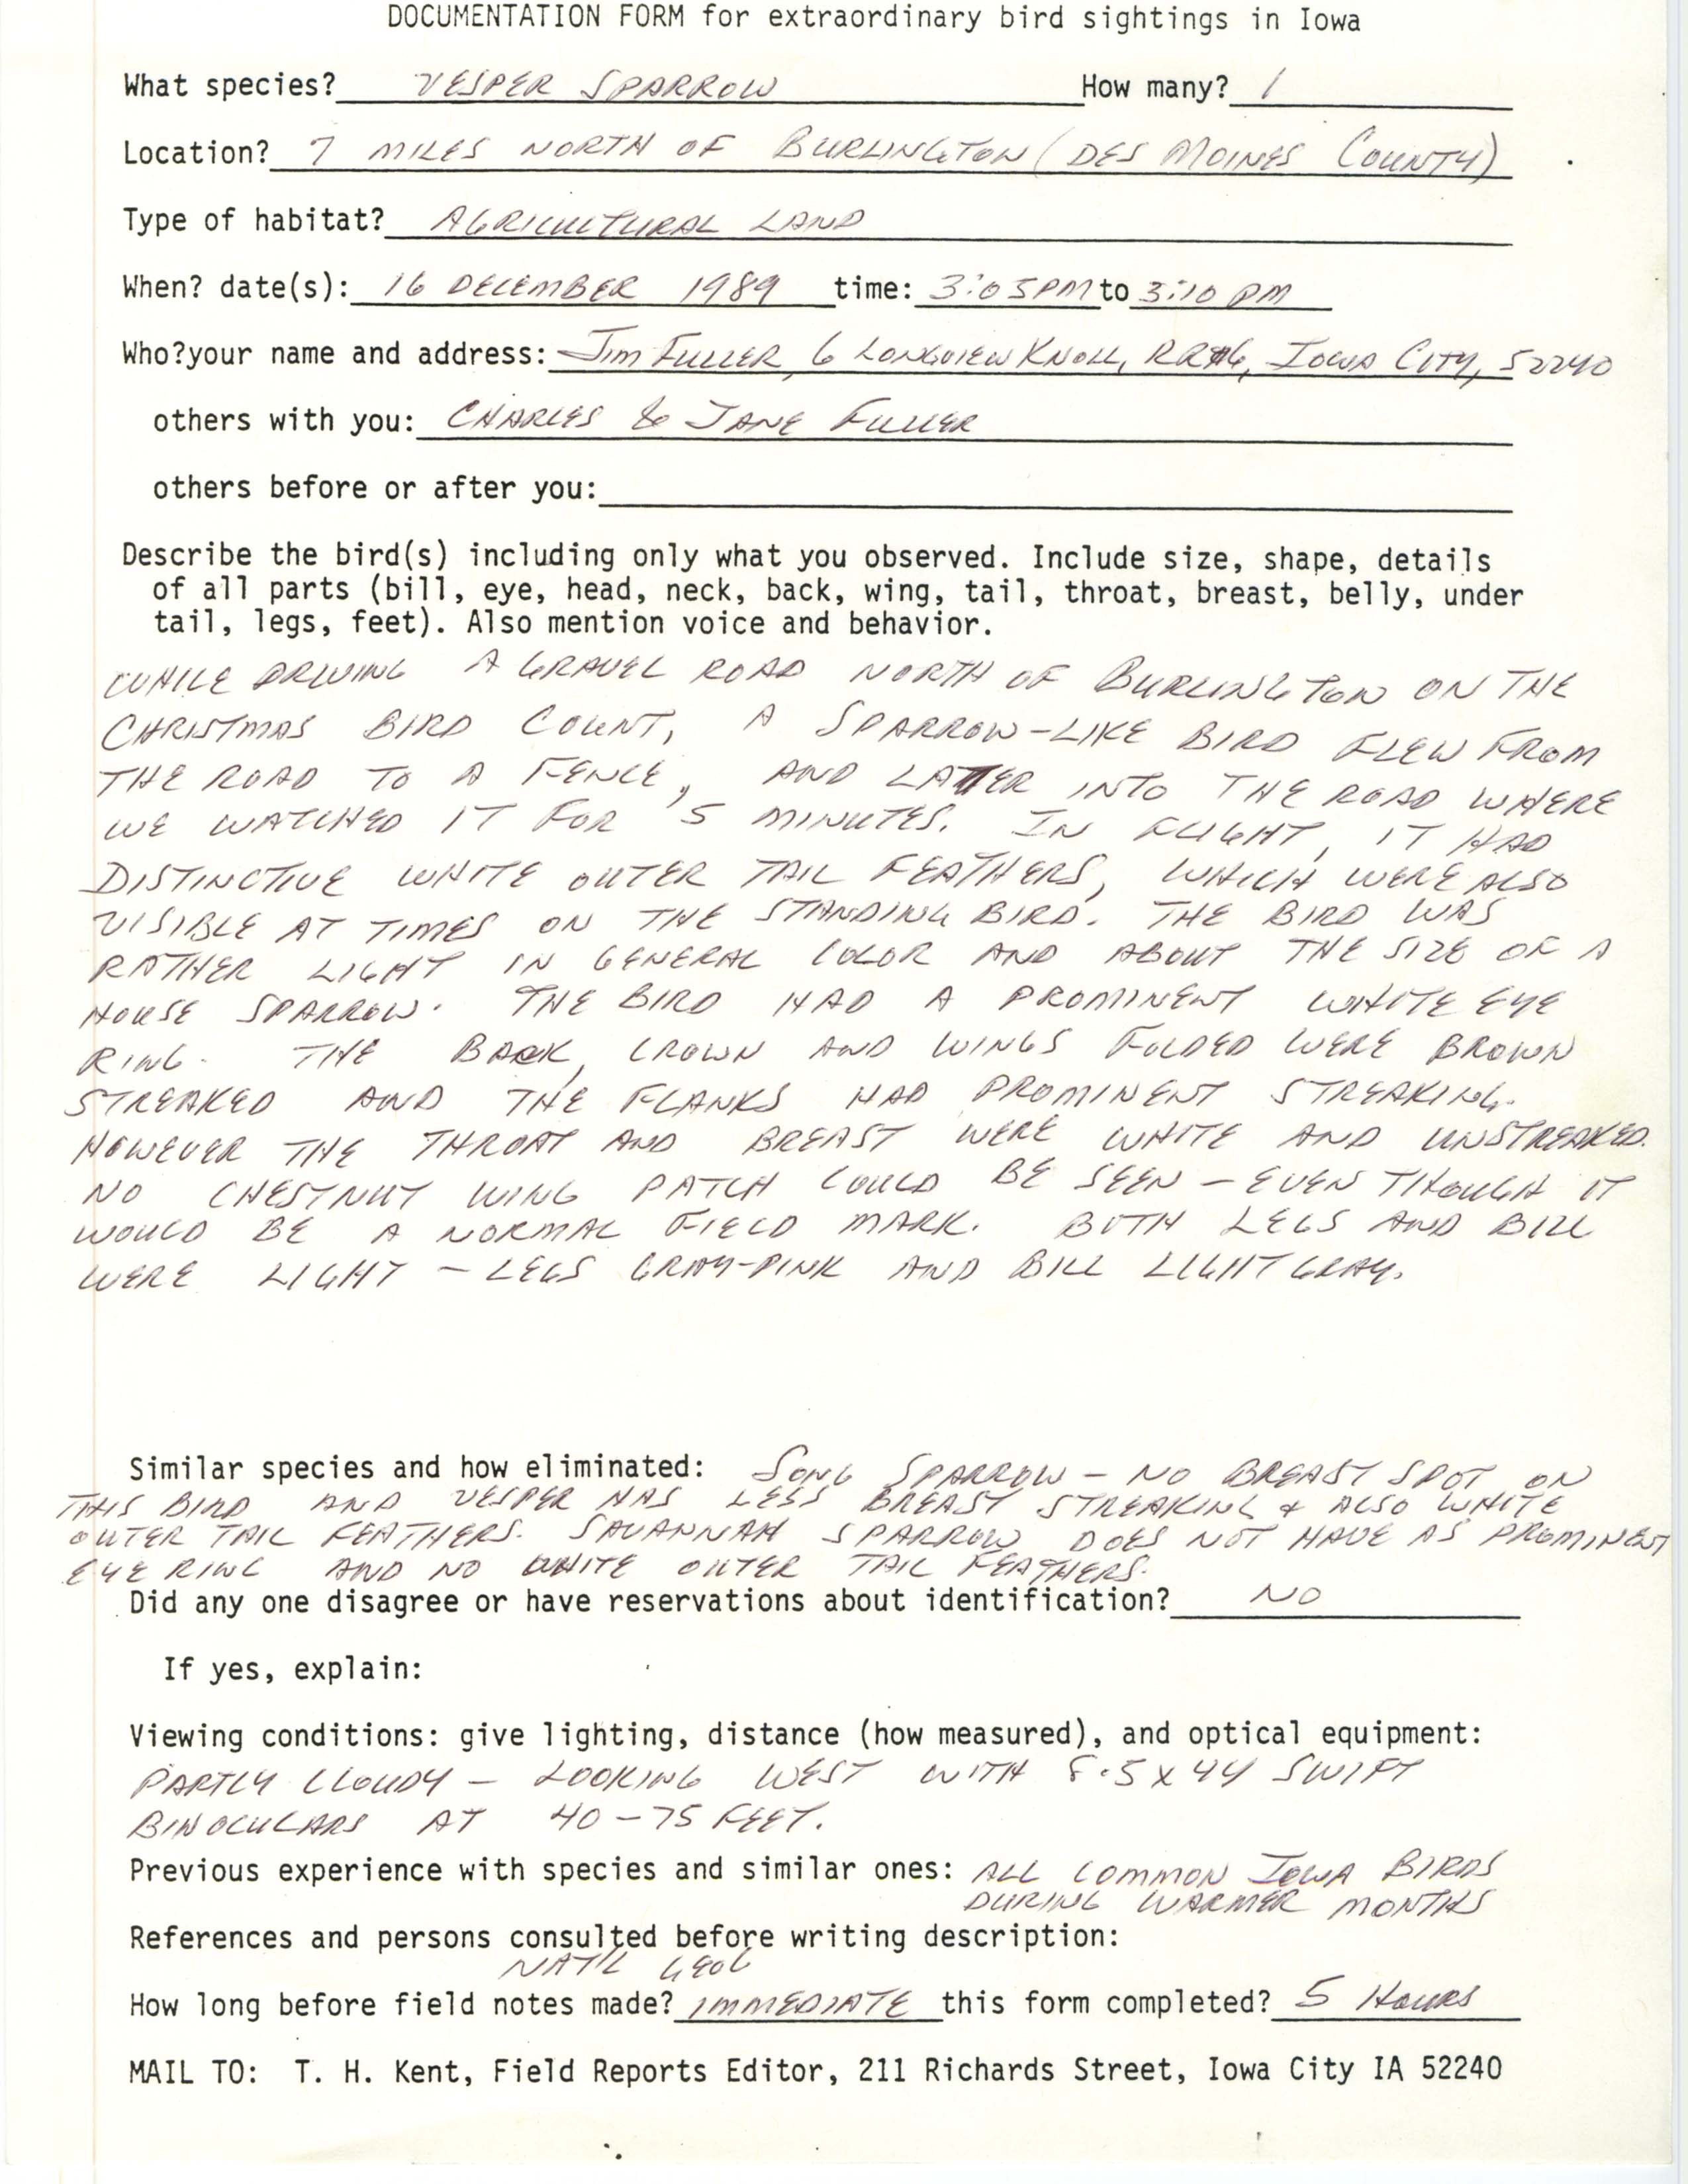 Rare bird documentation form for Vesper Sparrow in Des Moines County, 1989